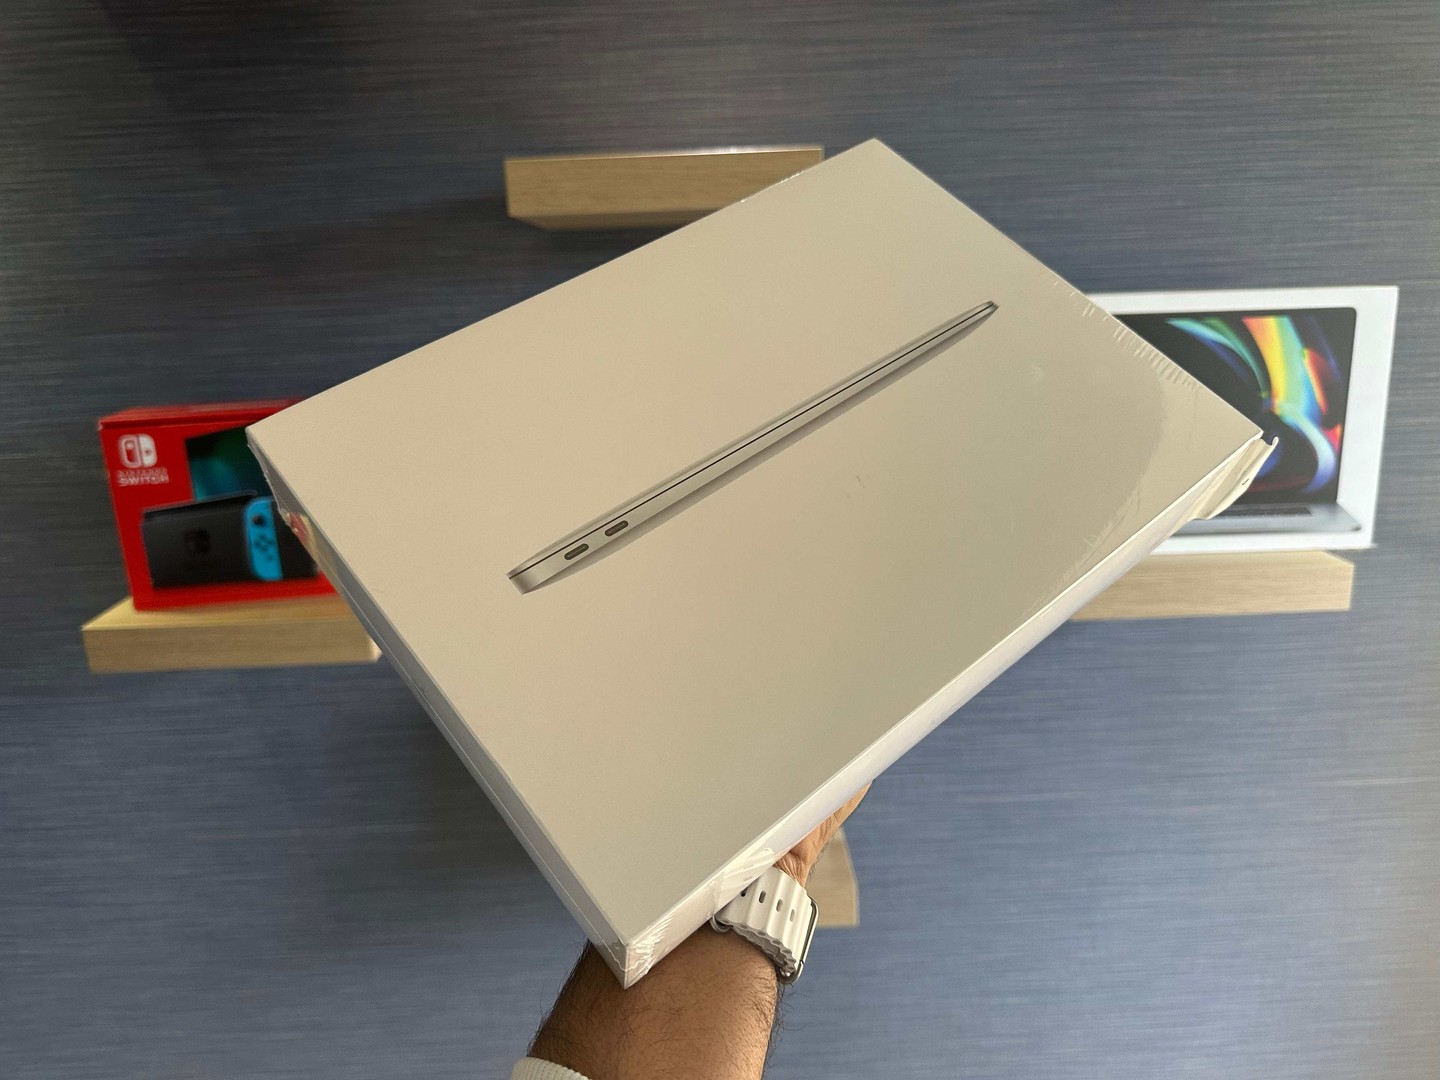 computadoras y laptops - MacBook Air 2020 13 inch/ M1 Apple Chip/ 256GB / 8GB RAM - Sellada $ 53,500 NEG